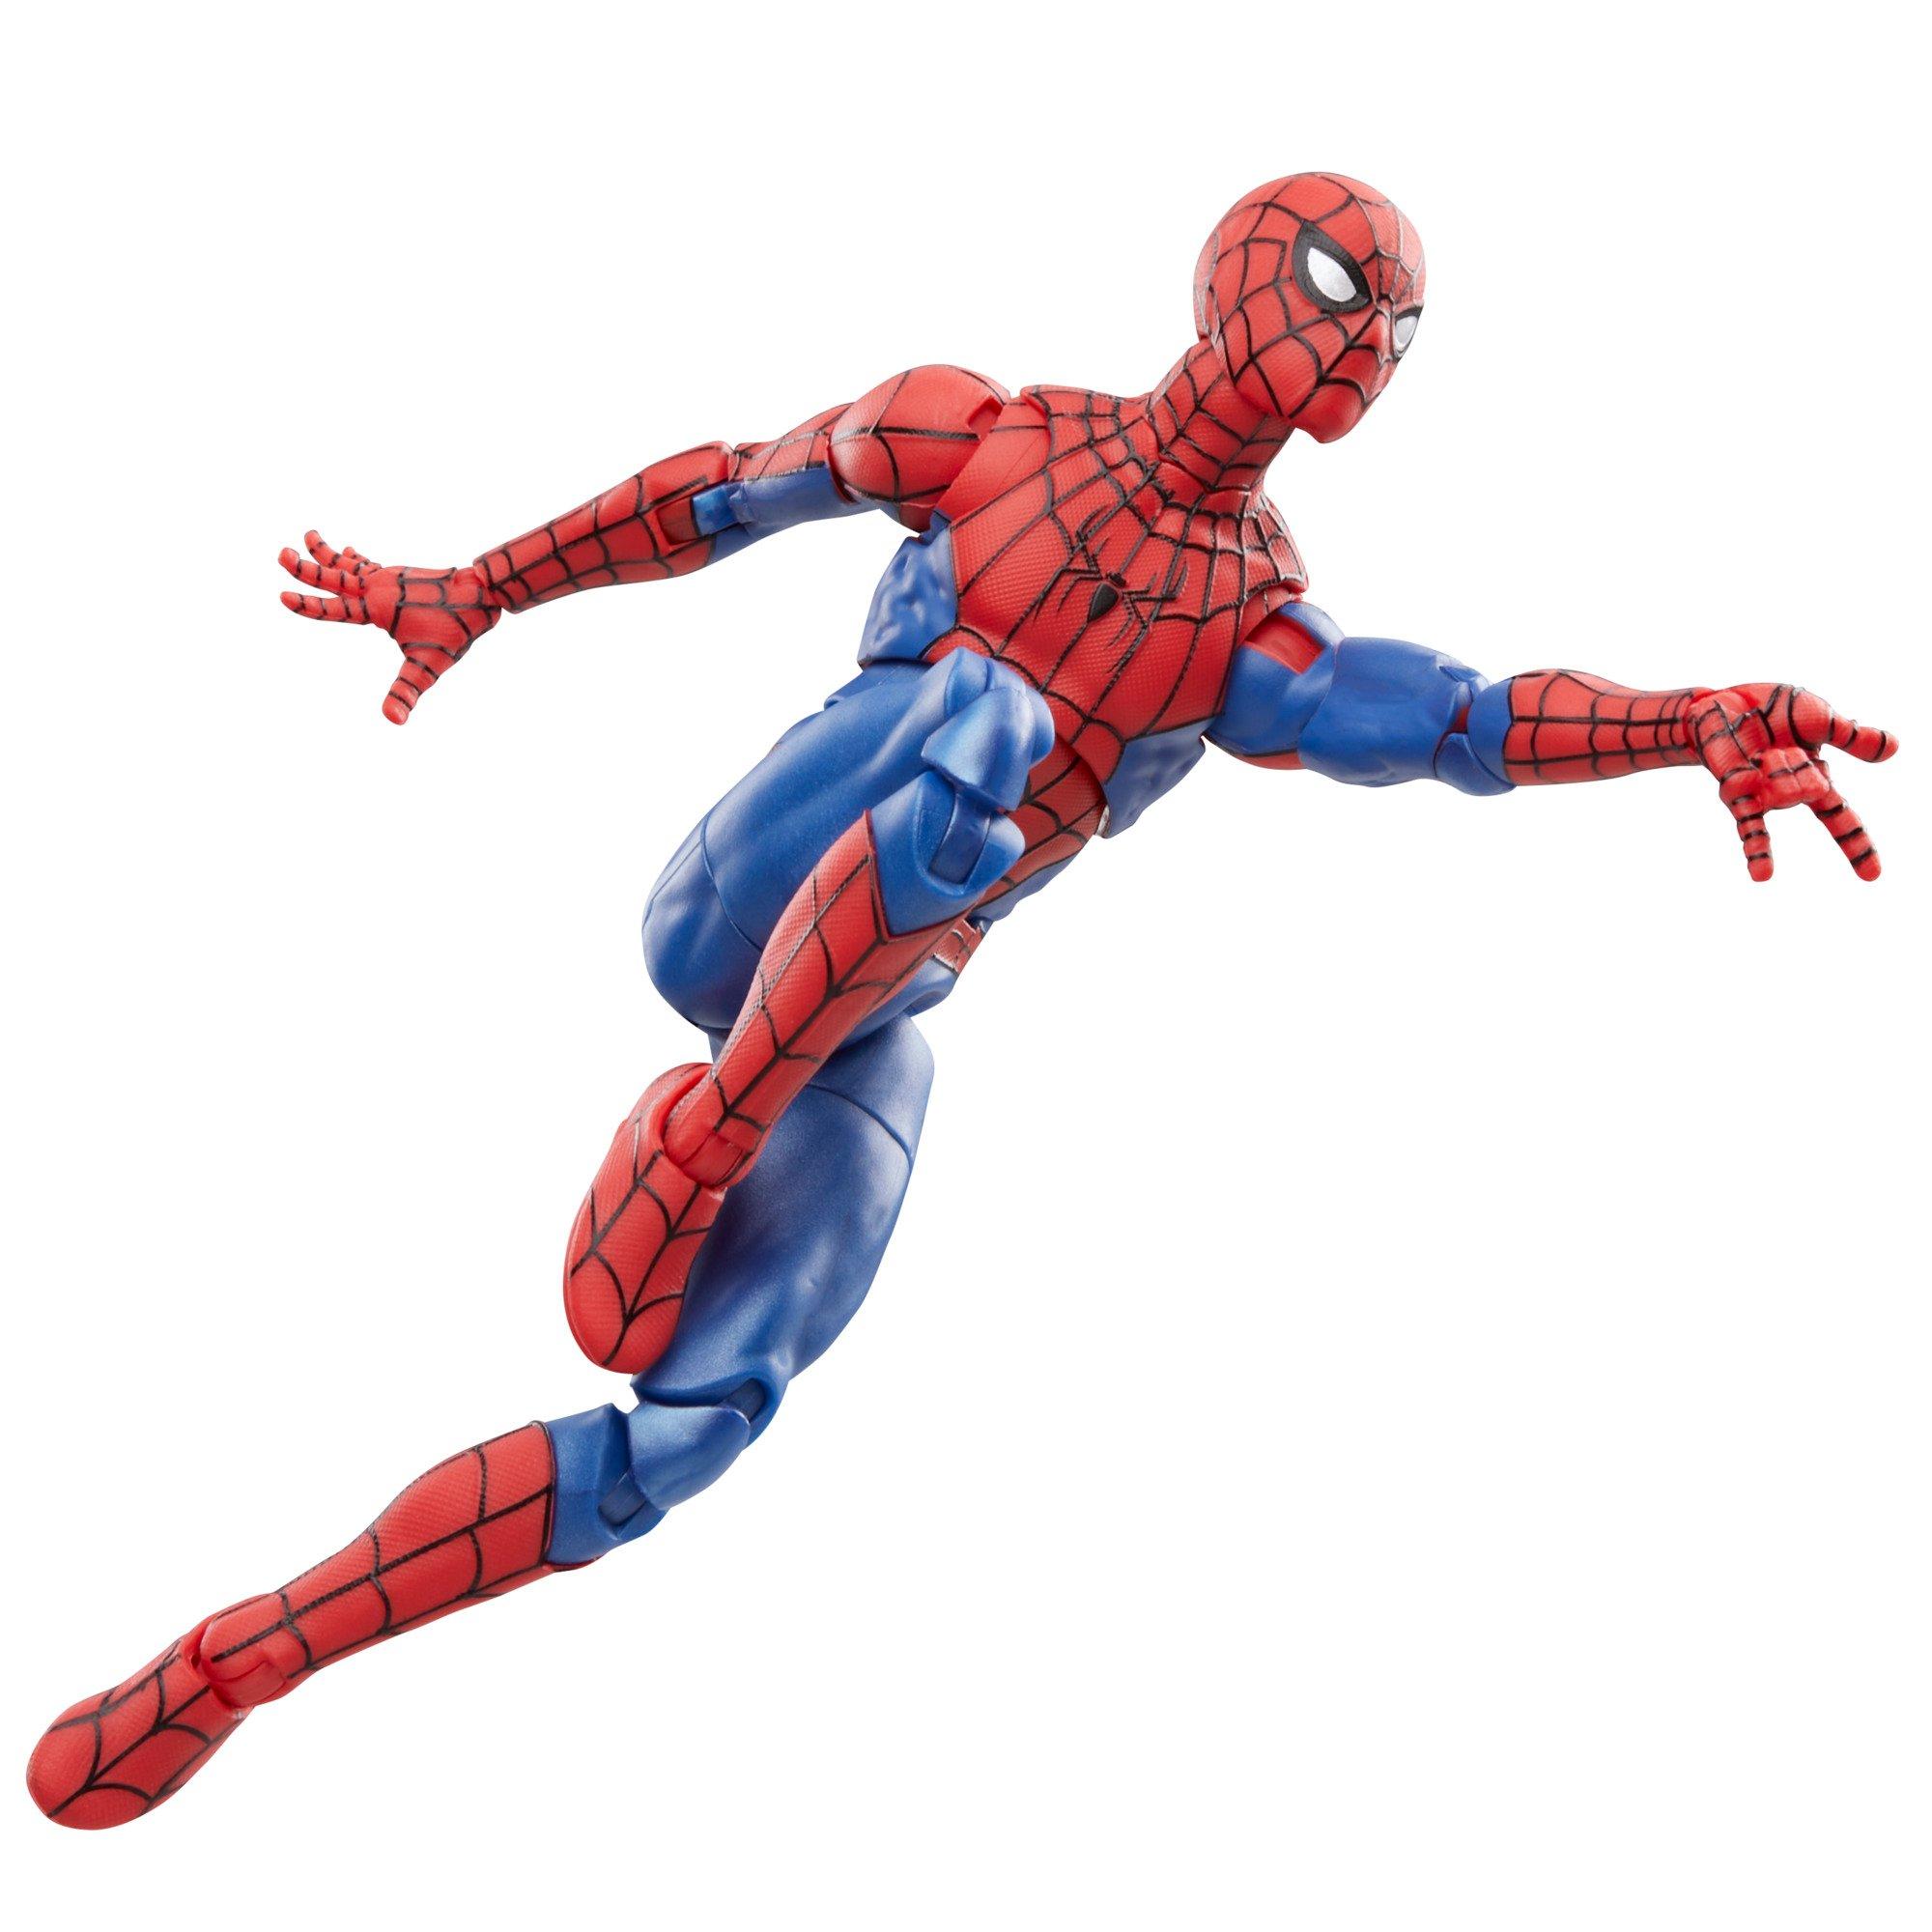 Hasbro's New Spider-Man No Way Home Figures: Green Goblin, Peter